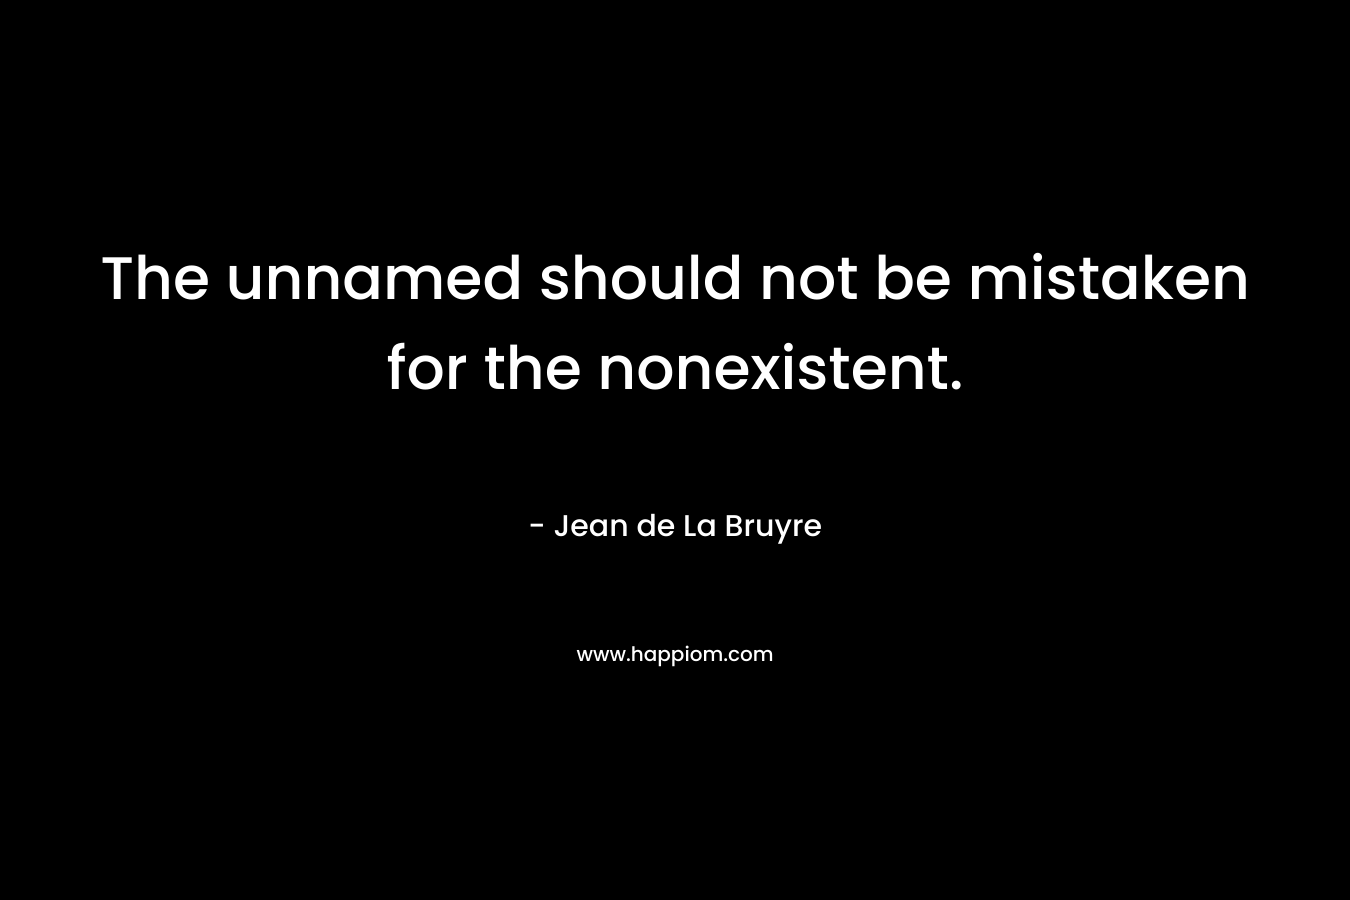 The unnamed should not be mistaken for the nonexistent. – Jean de La Bruyre